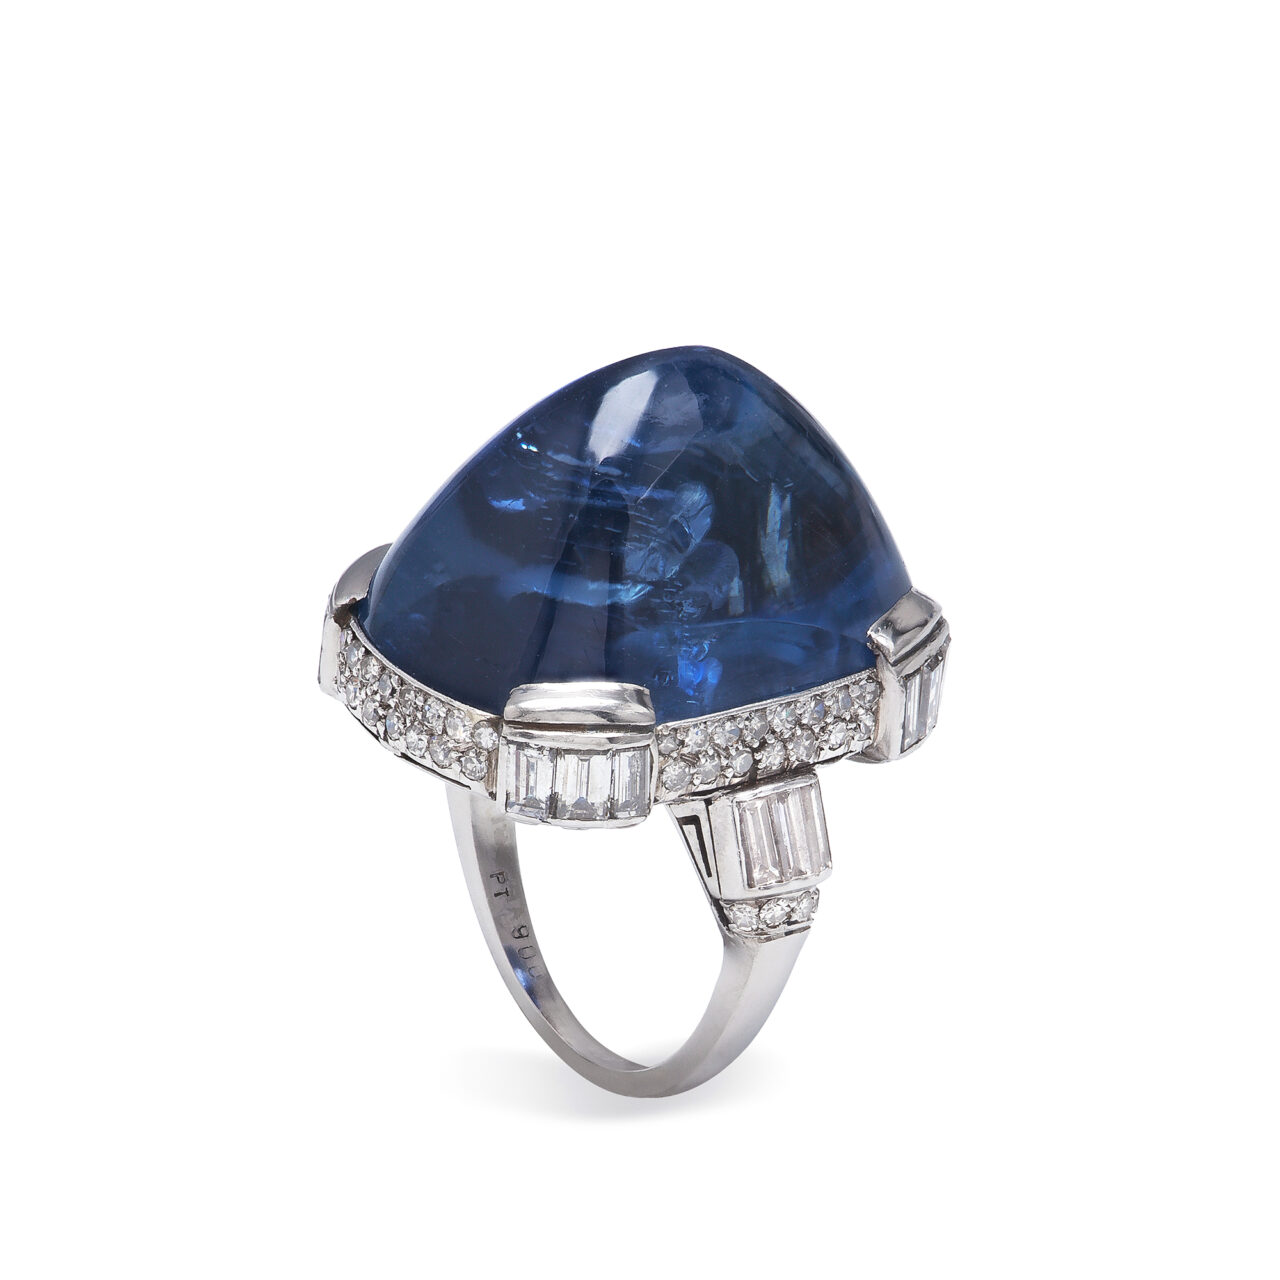 Bulgari ring in platinum with sugar loaf cut Ceylon sapphire and diamonds.